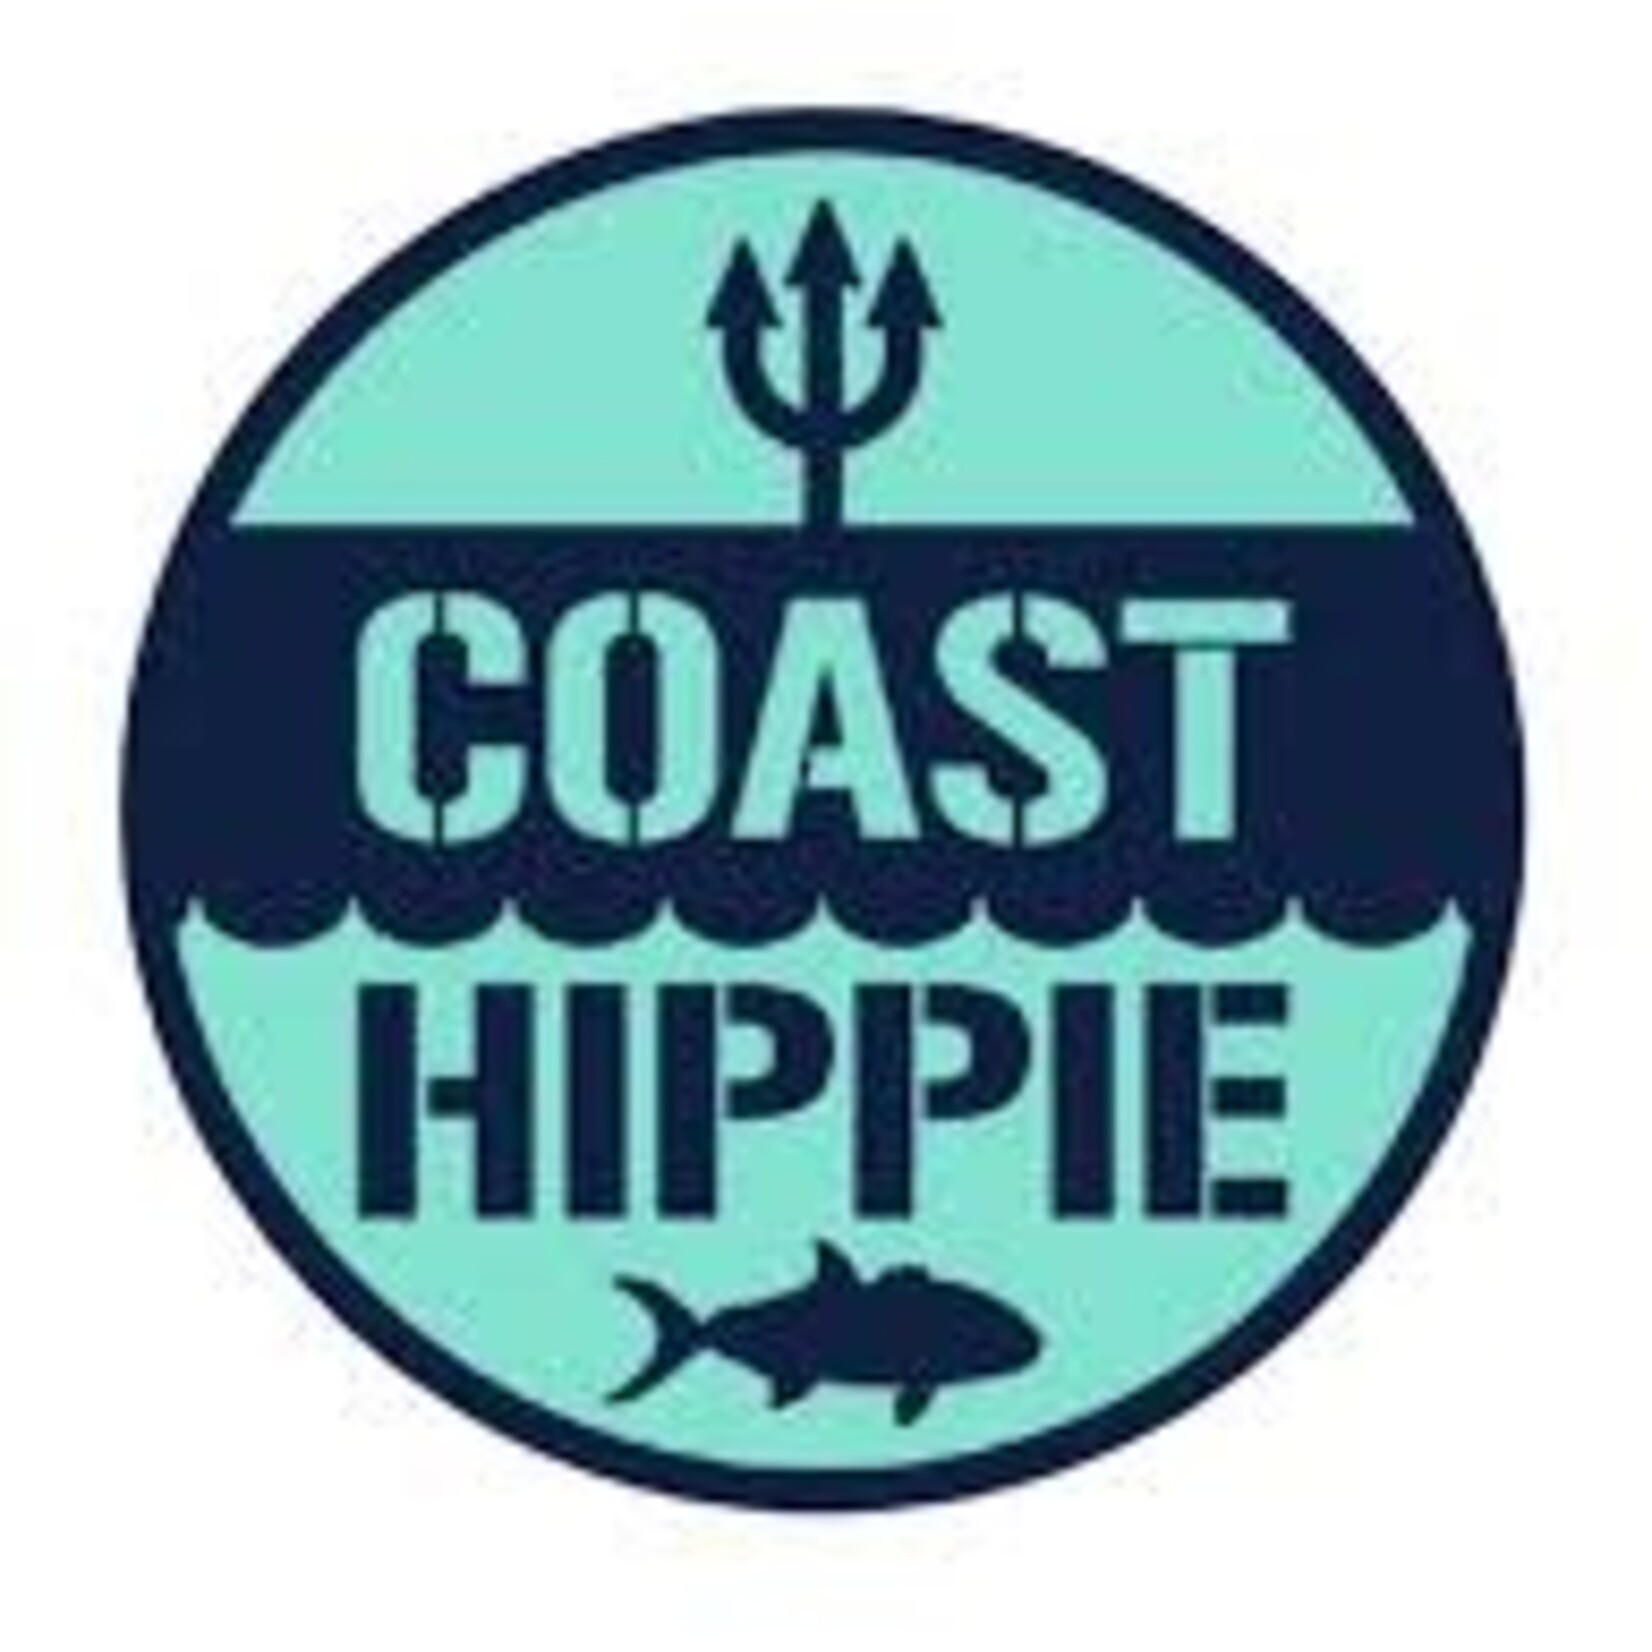 Coast Hippie Stickers The Neptune - Blue